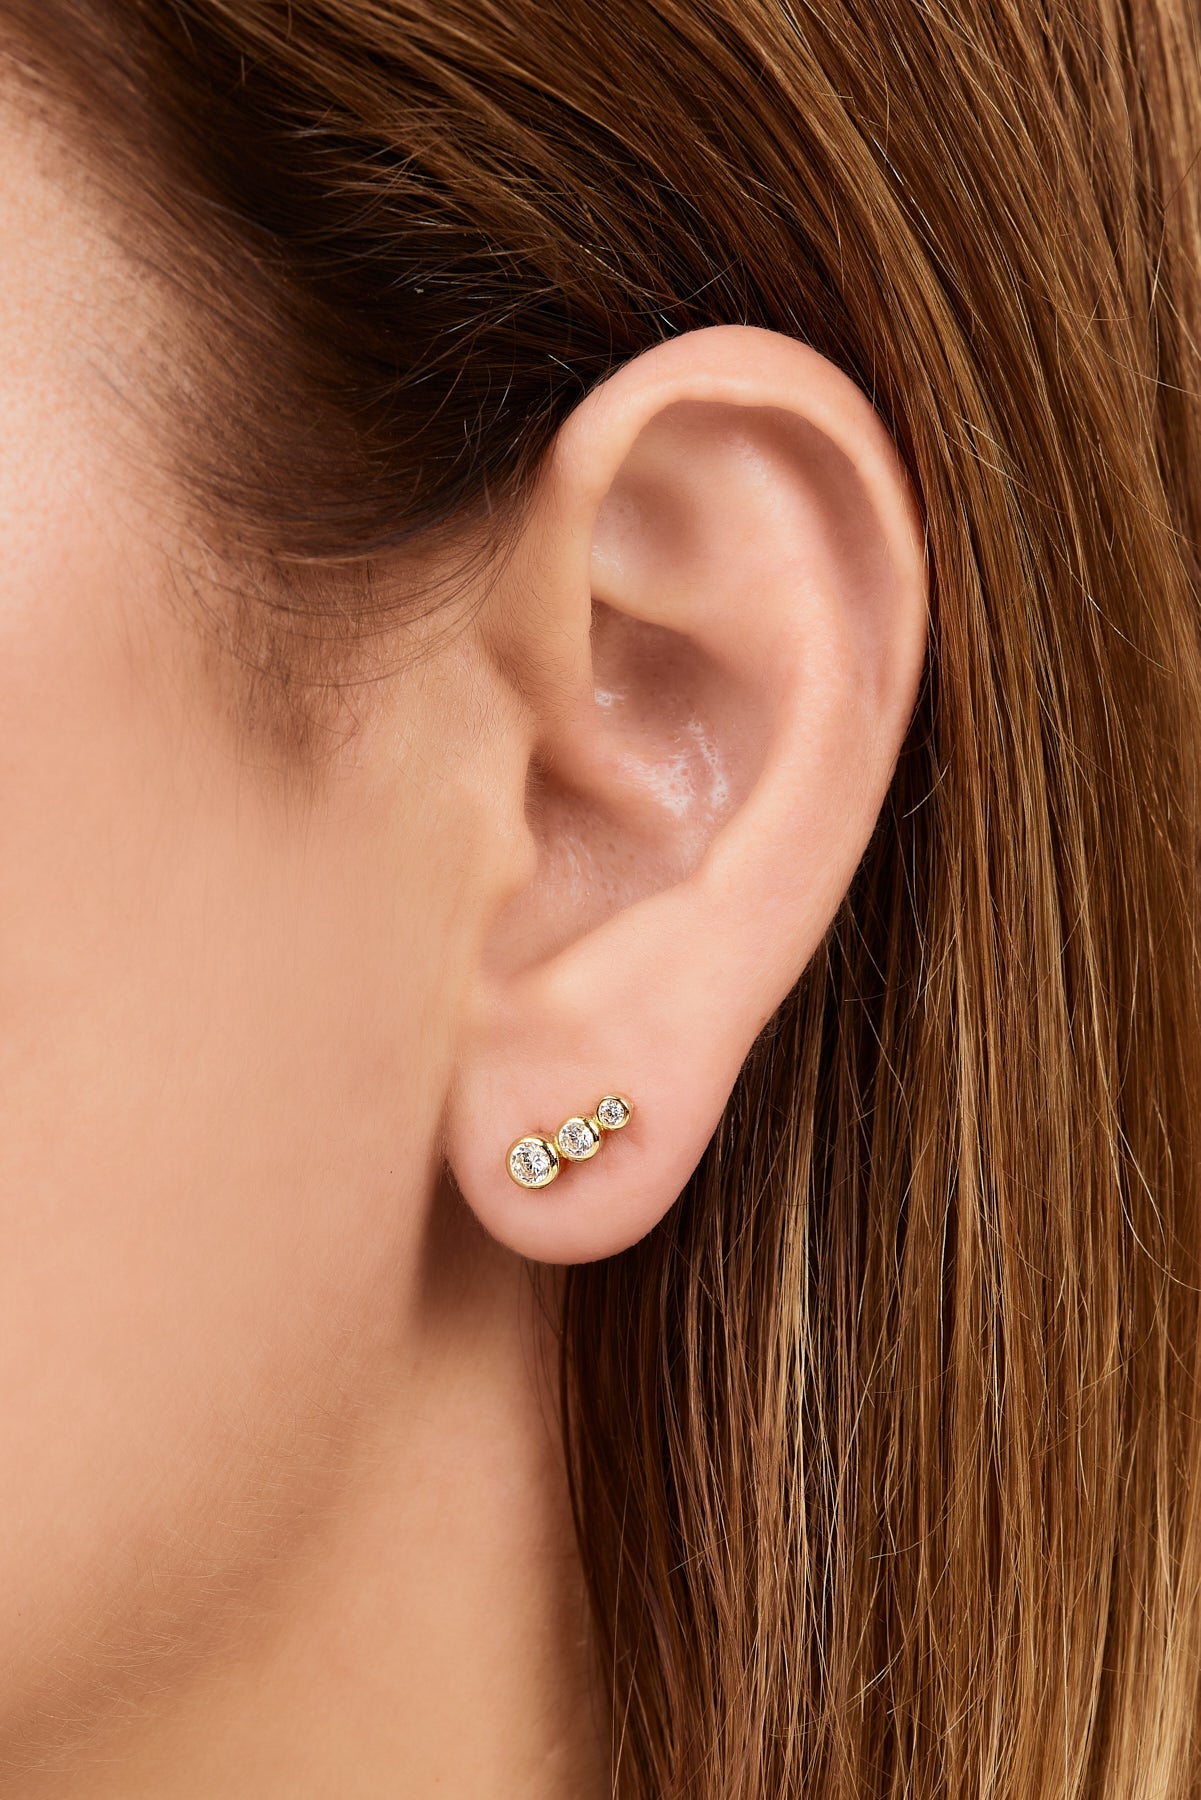 Single earring Lola mini croissant gold vermeil stud earring